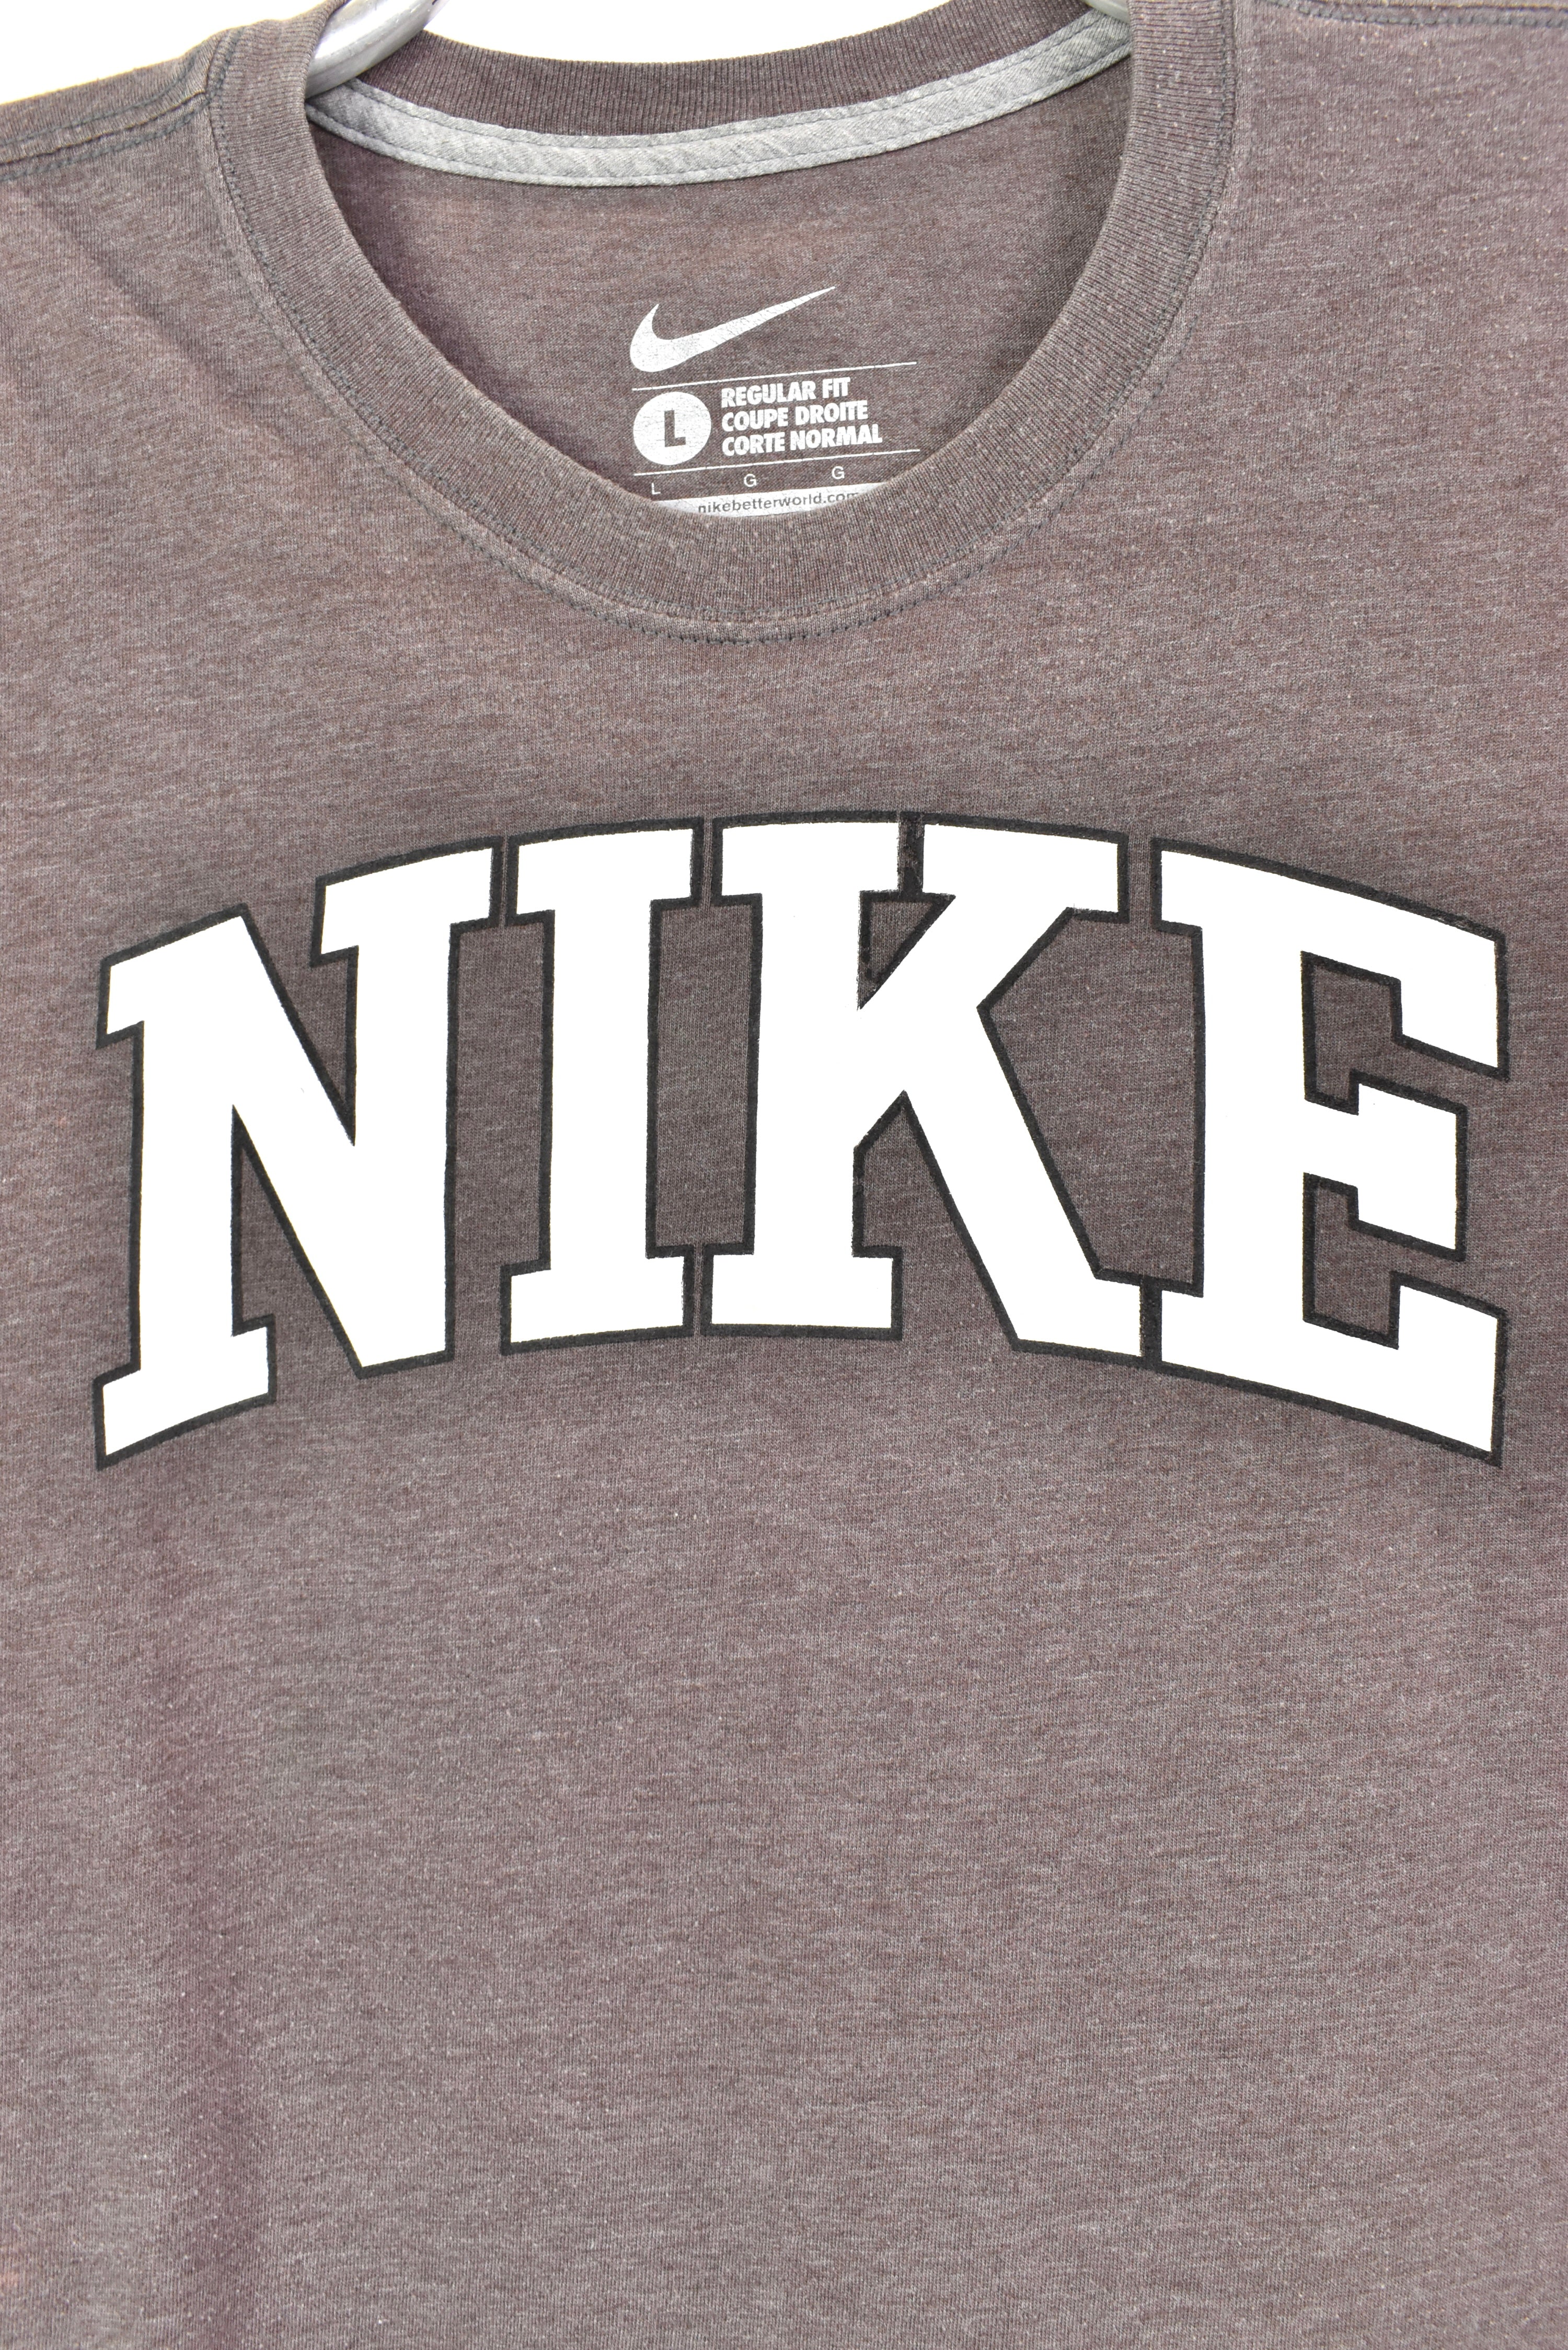 Modern Nike shirt, short sleeve graphic tee - medium, brown NIKE